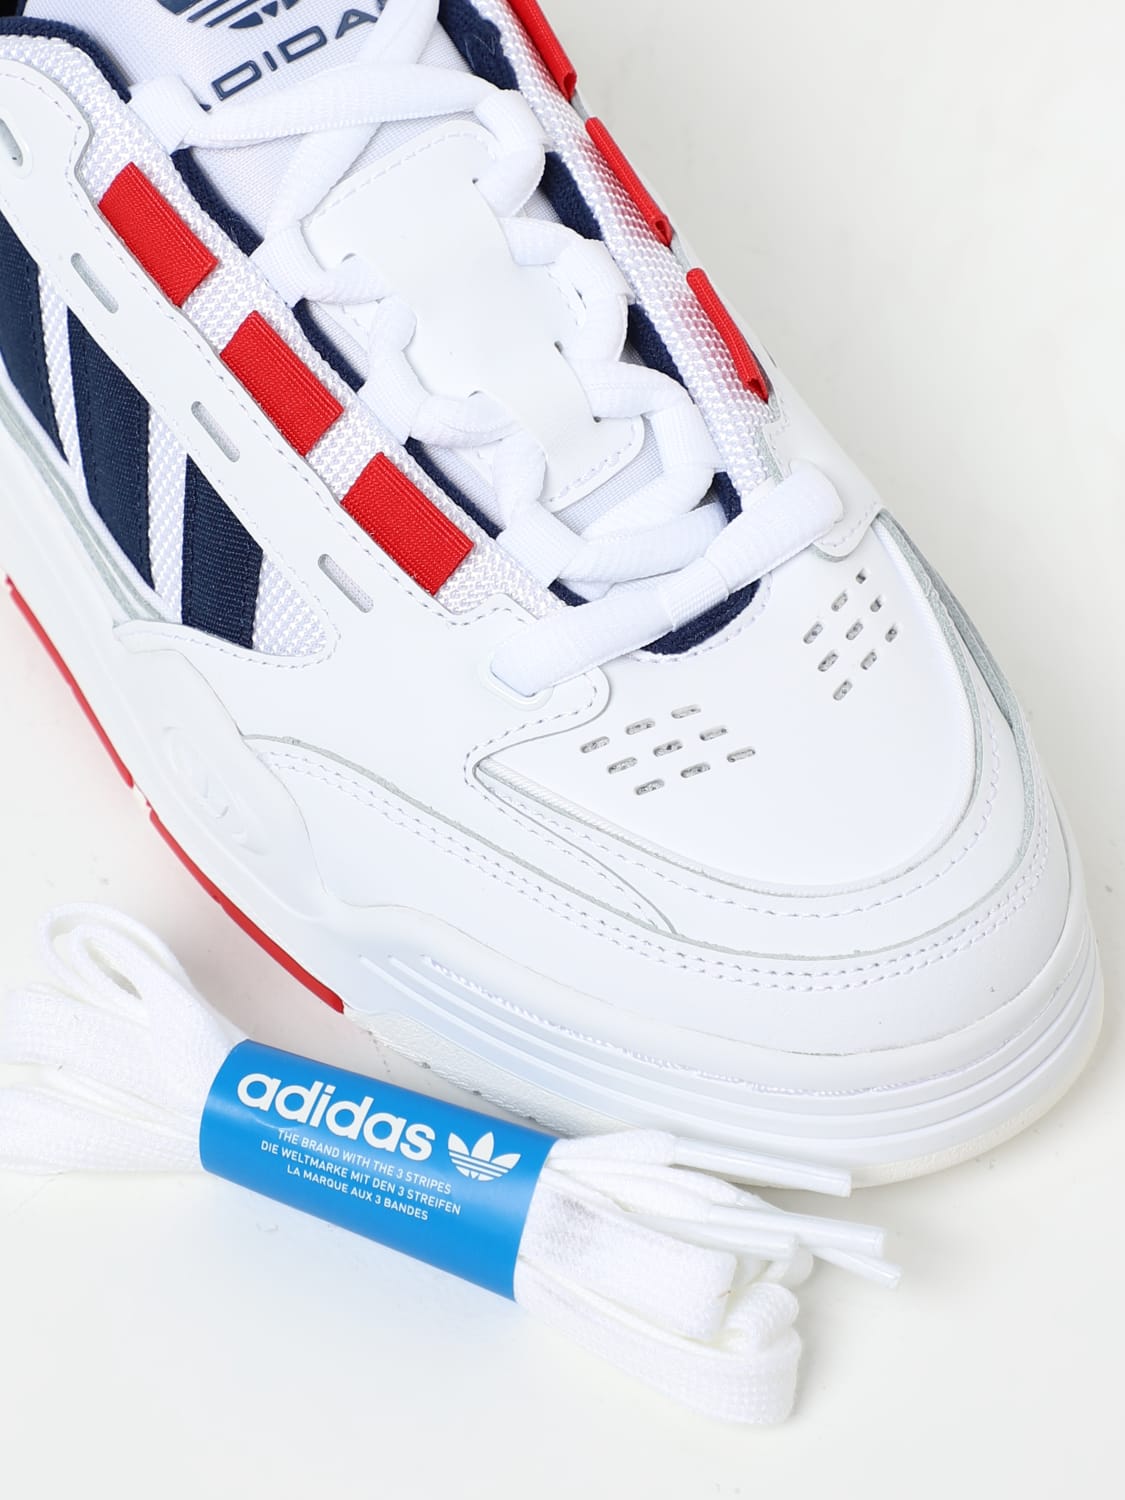 ADIDAS ORIGINALS: ADI2000 sneakers in leather and mesh - White | Adidas  Originals sneakers ID2103 online at